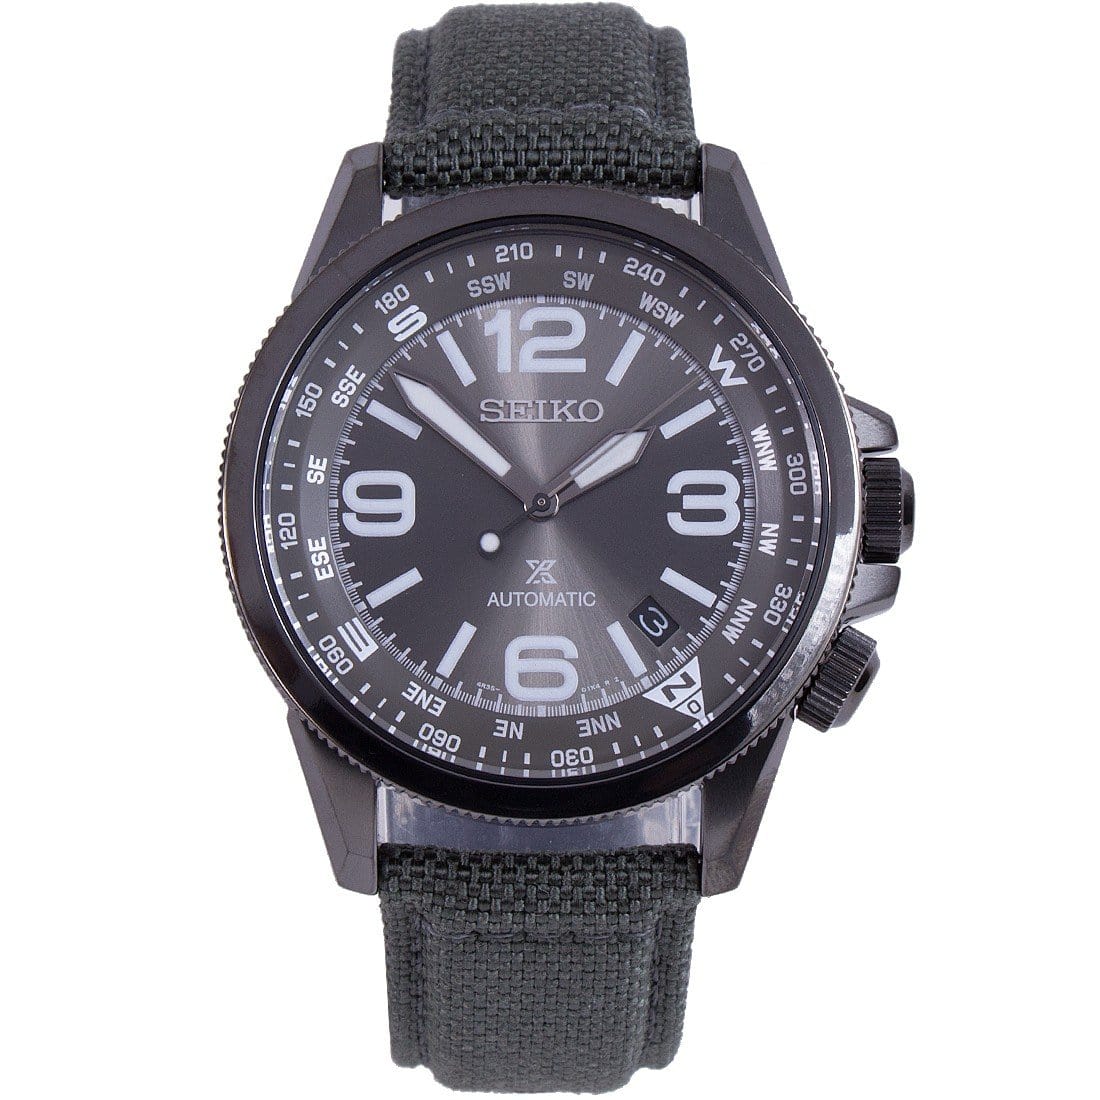 Seiko Prospex Land Automatic Nylon Watch SRPC29 SRPC29K1